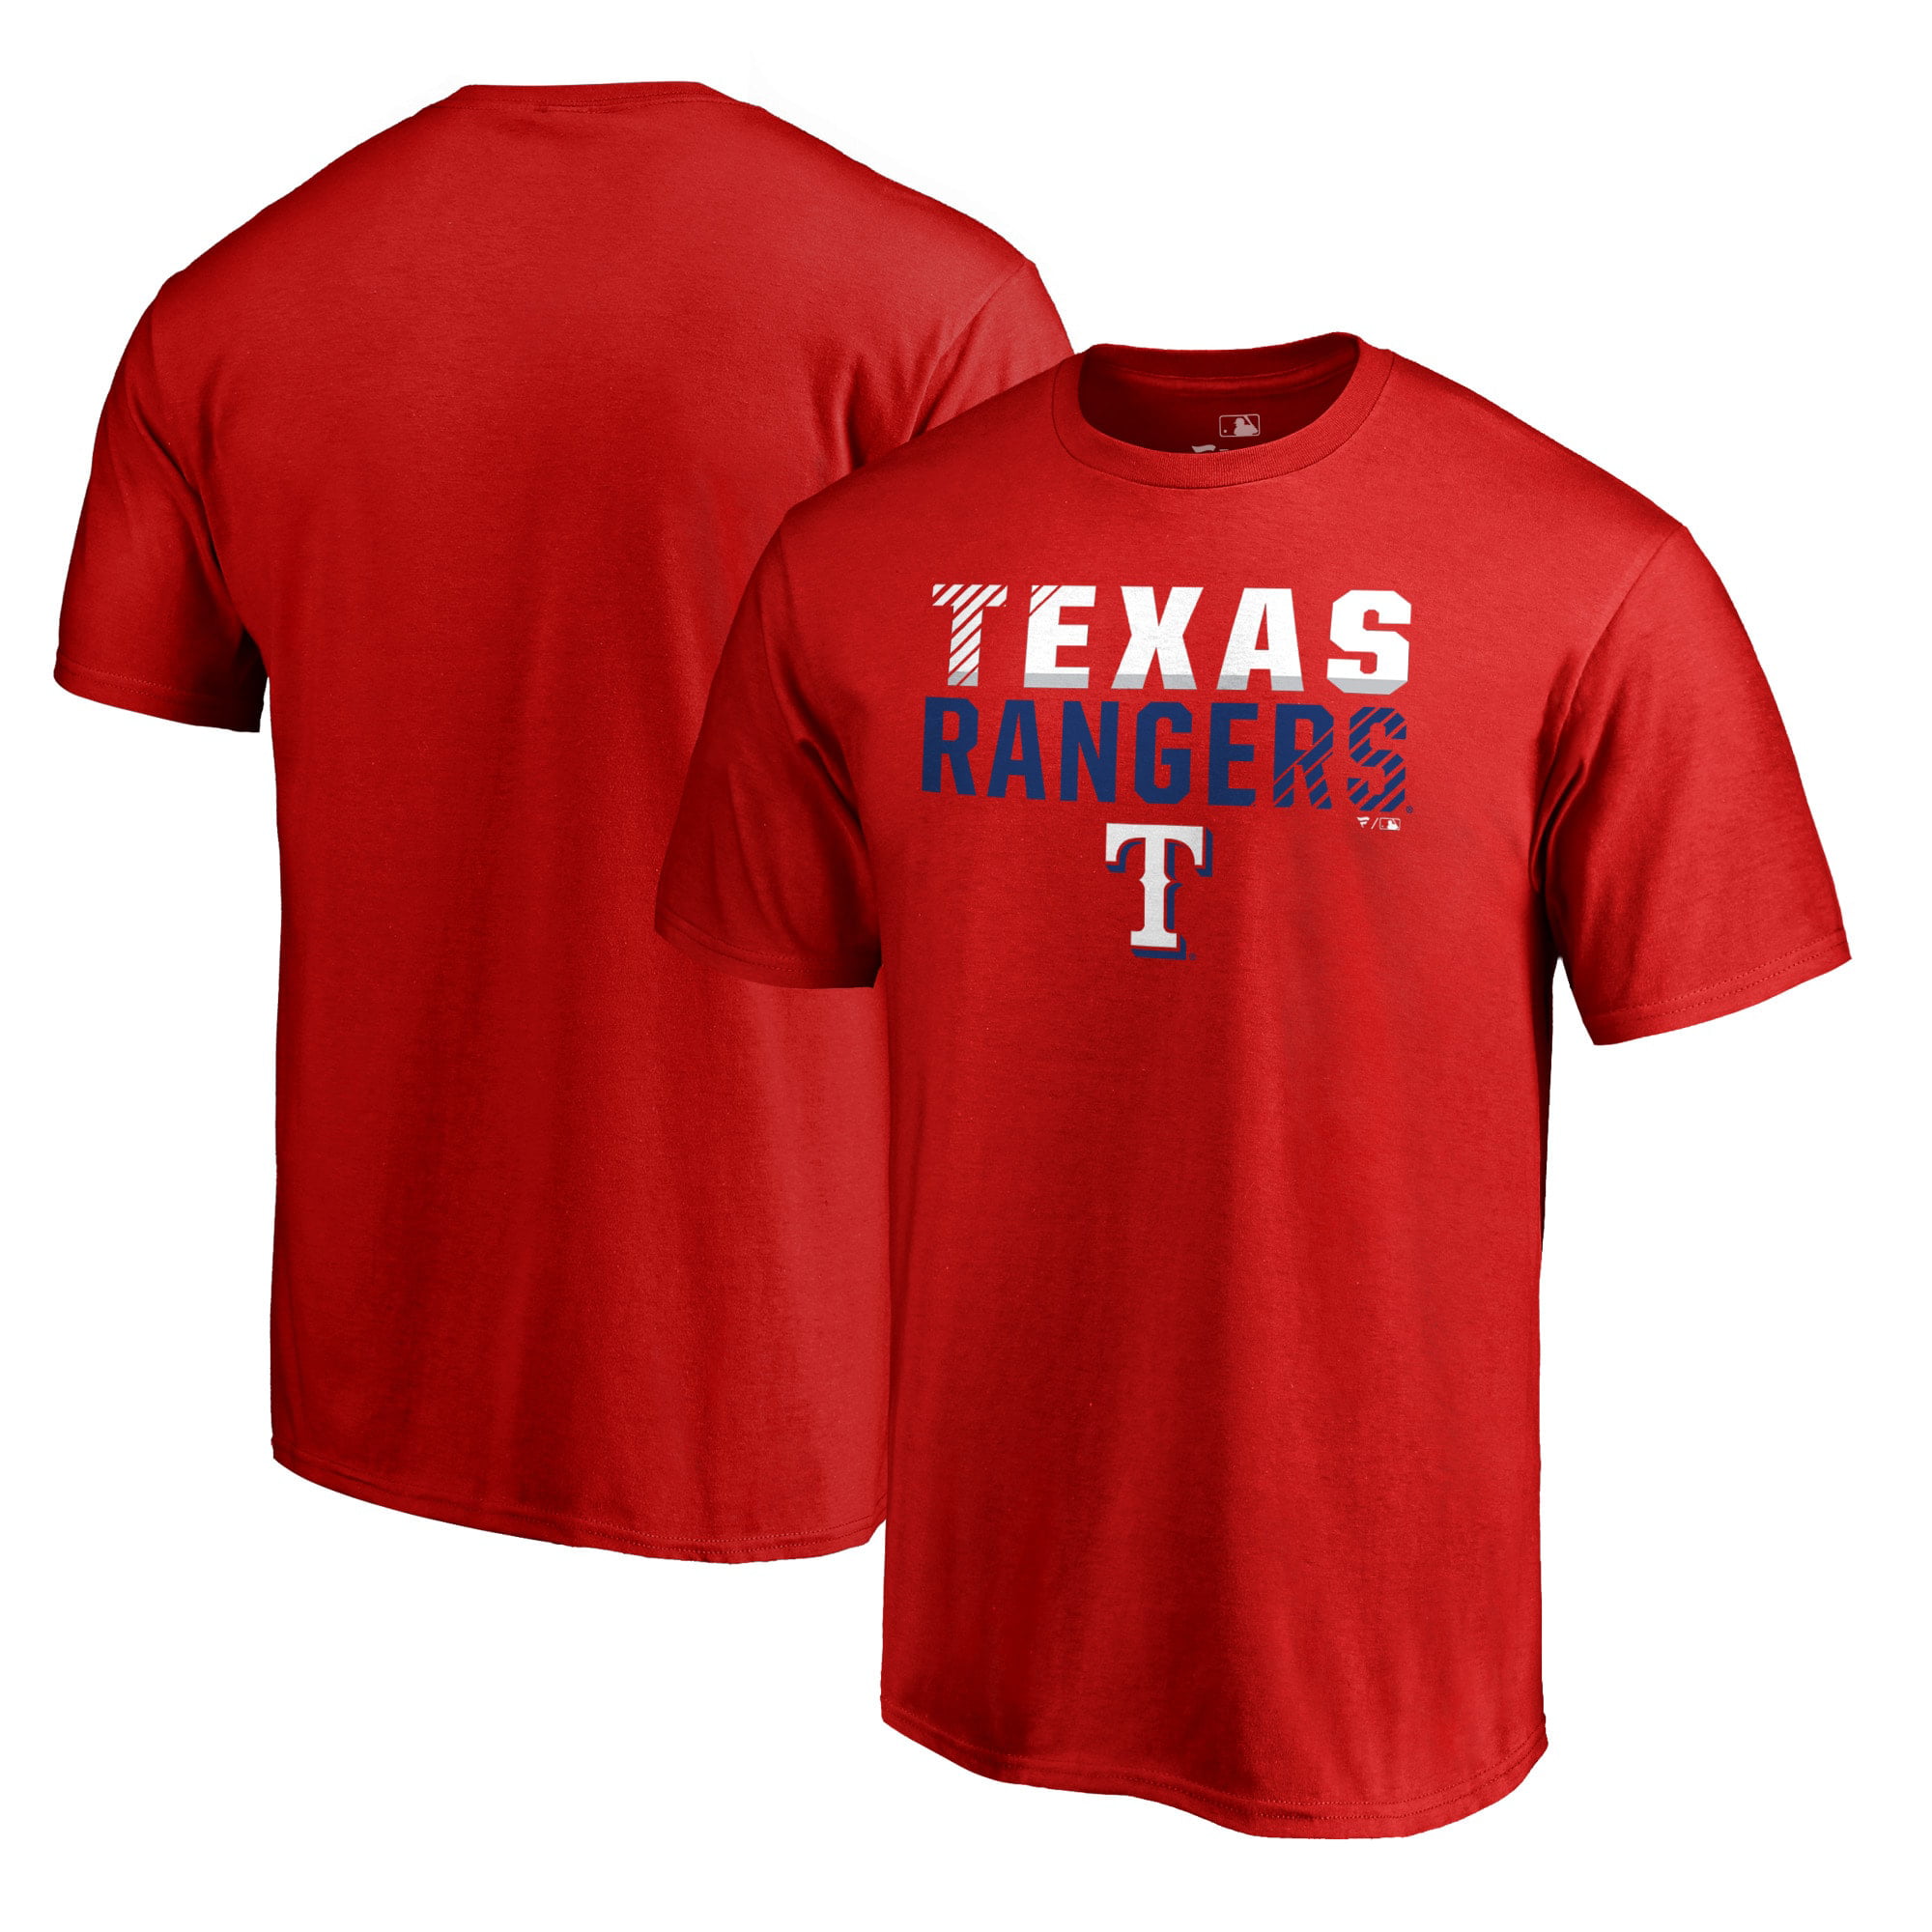 texas rangers shirts kohl's